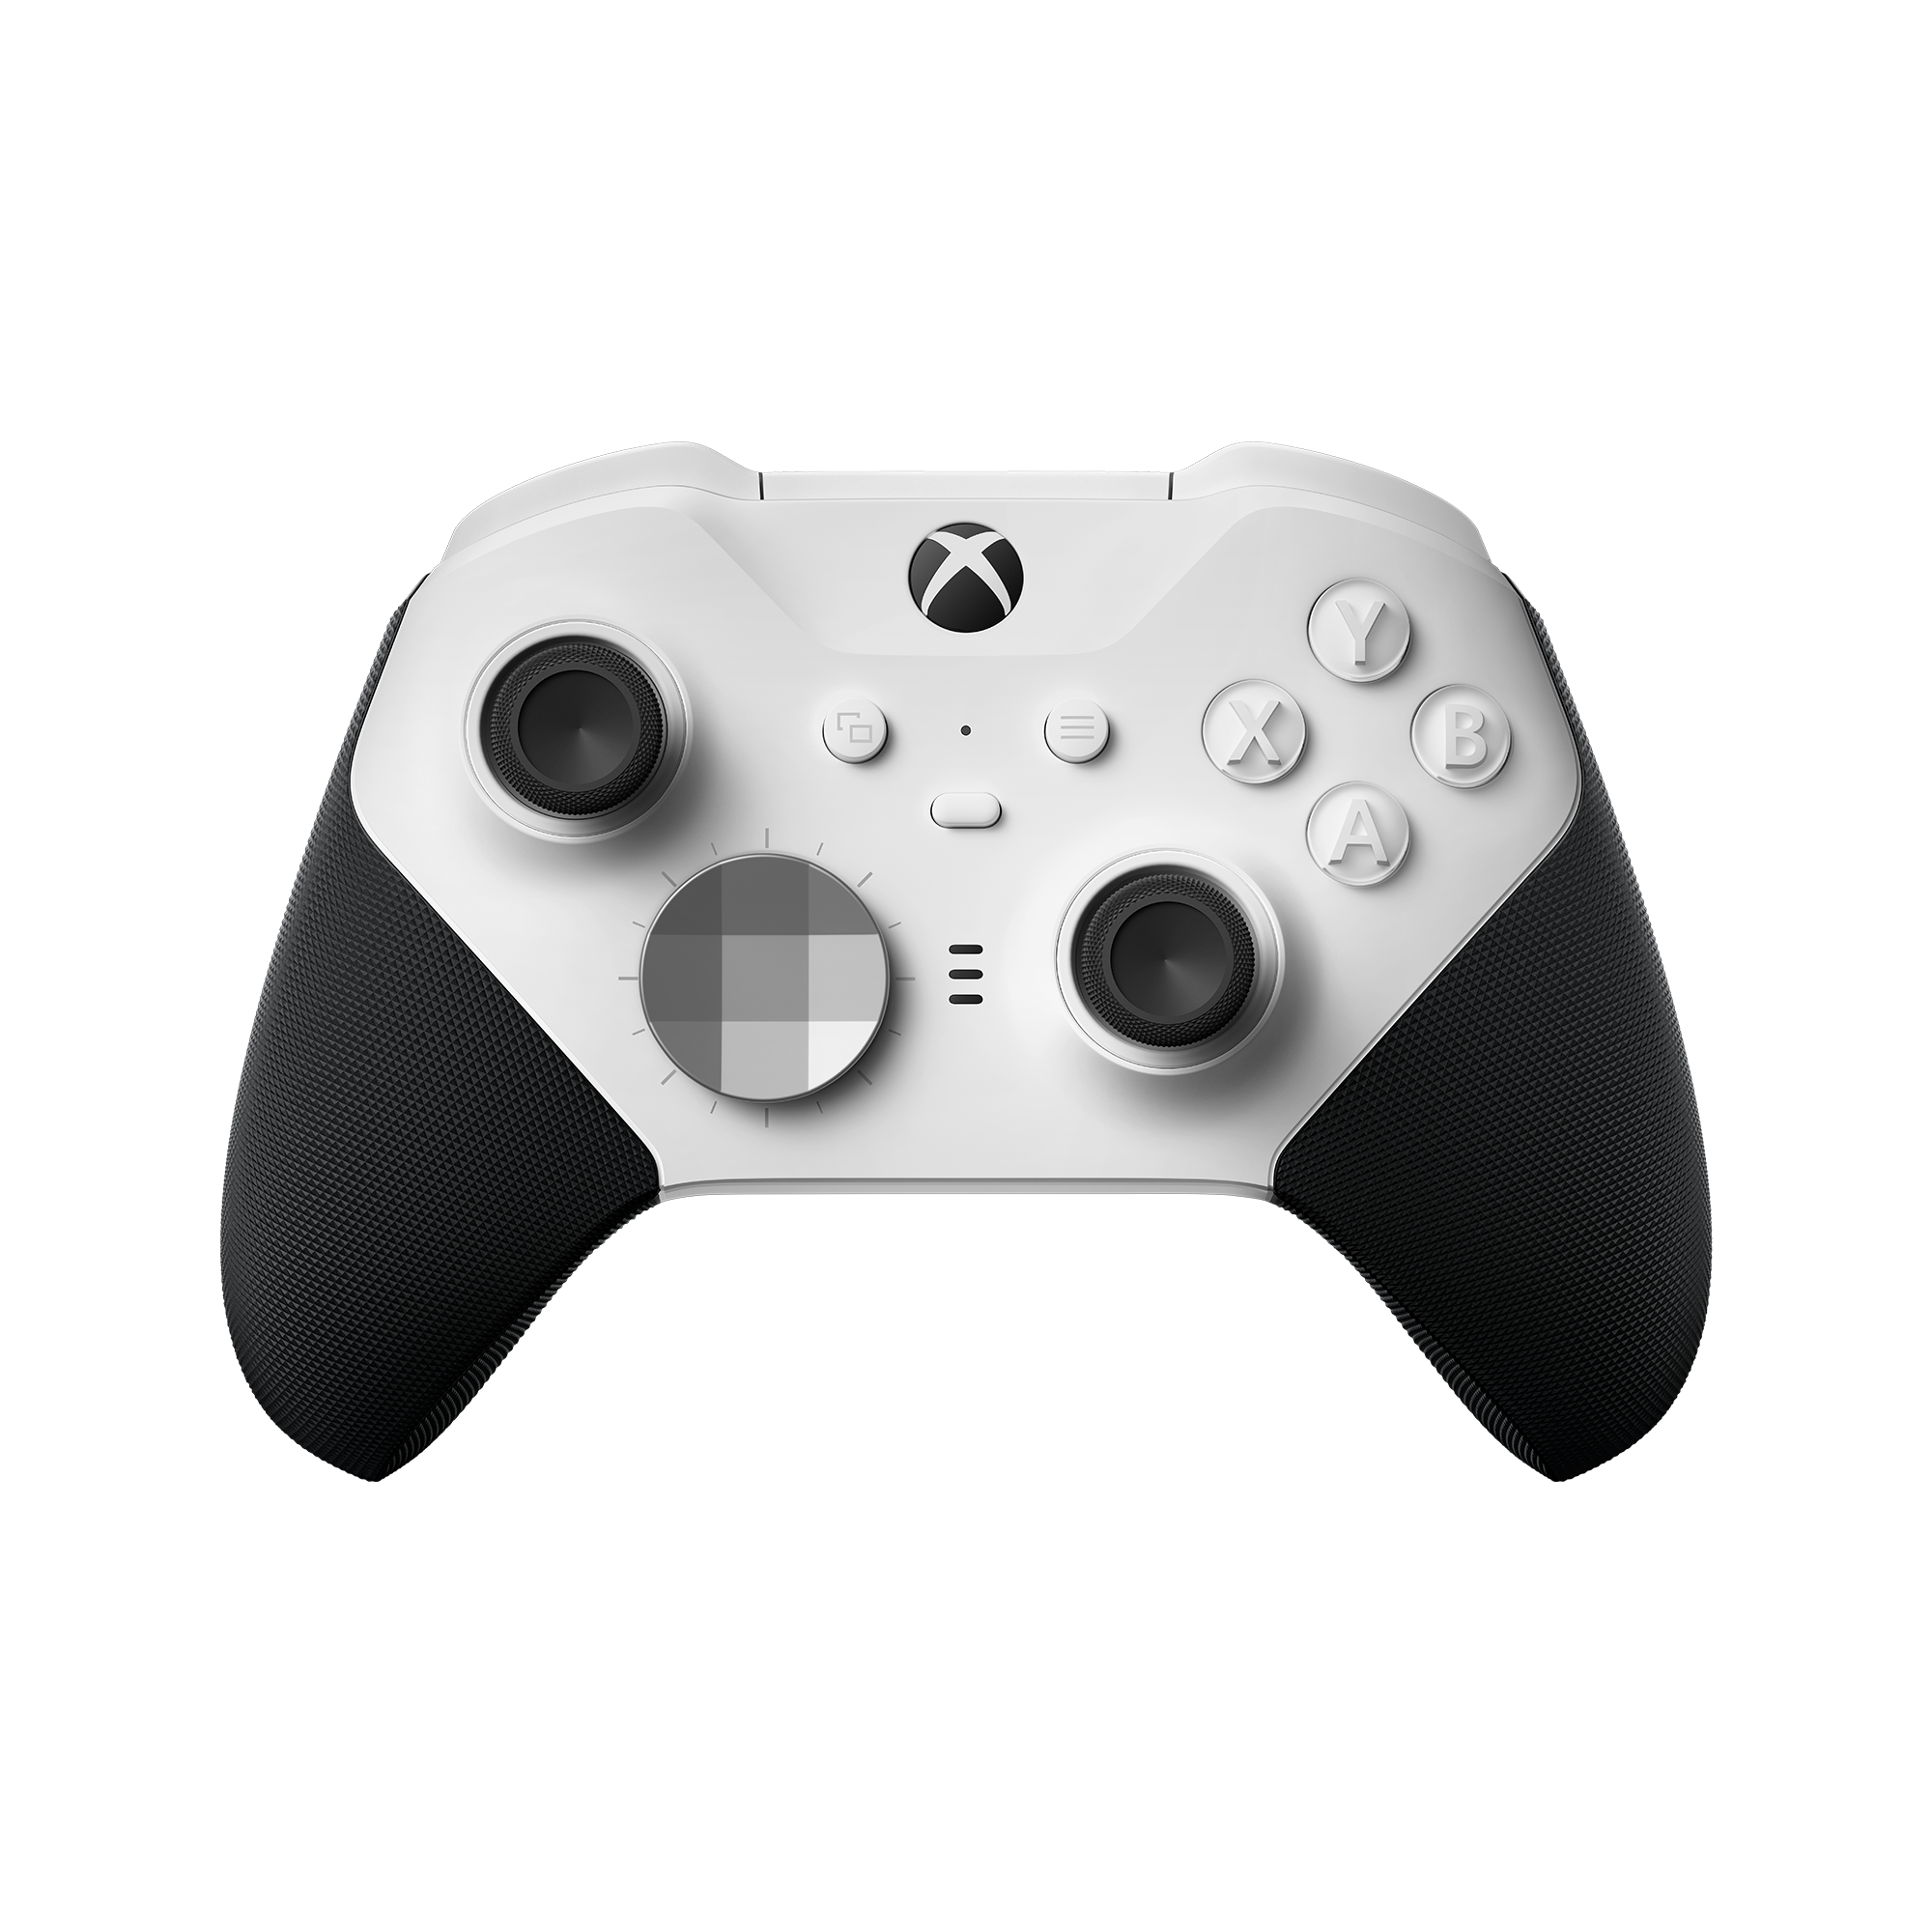 Silver Chrome Xbox One Elite Series 2 Controller